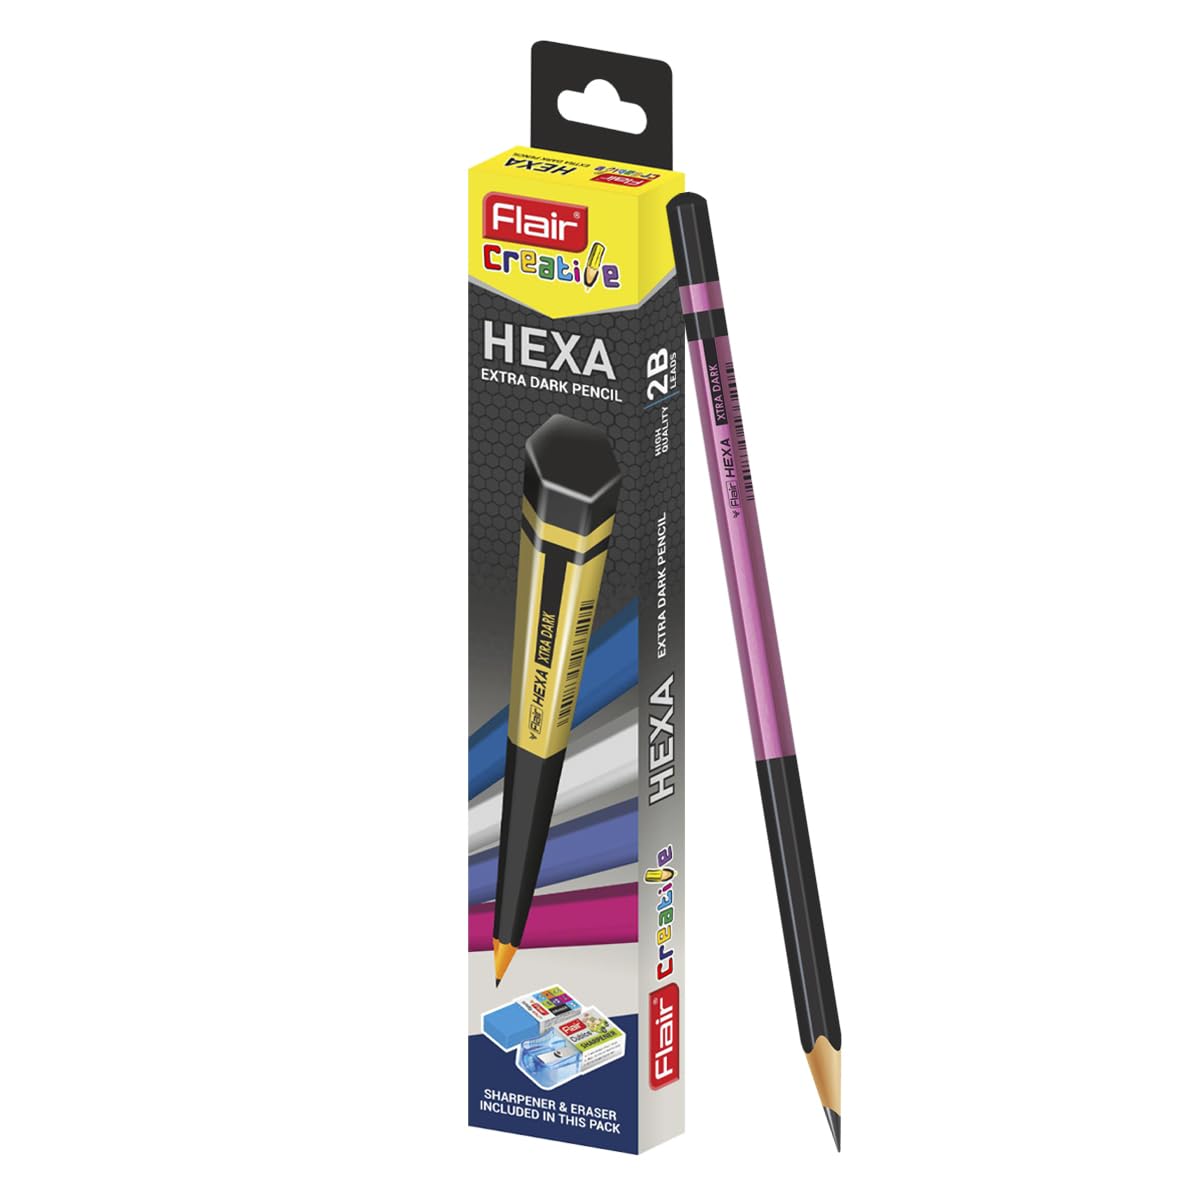 FLAIR Creative Series Hexa Extra Dark 2B Pencil Box Pack | Hexagonal Body With Metallic Finish | Non-Toxic | Free Sharpner & Eraser Inside | Easy & Smooth Sharpening | Pack Of 10 Pencils